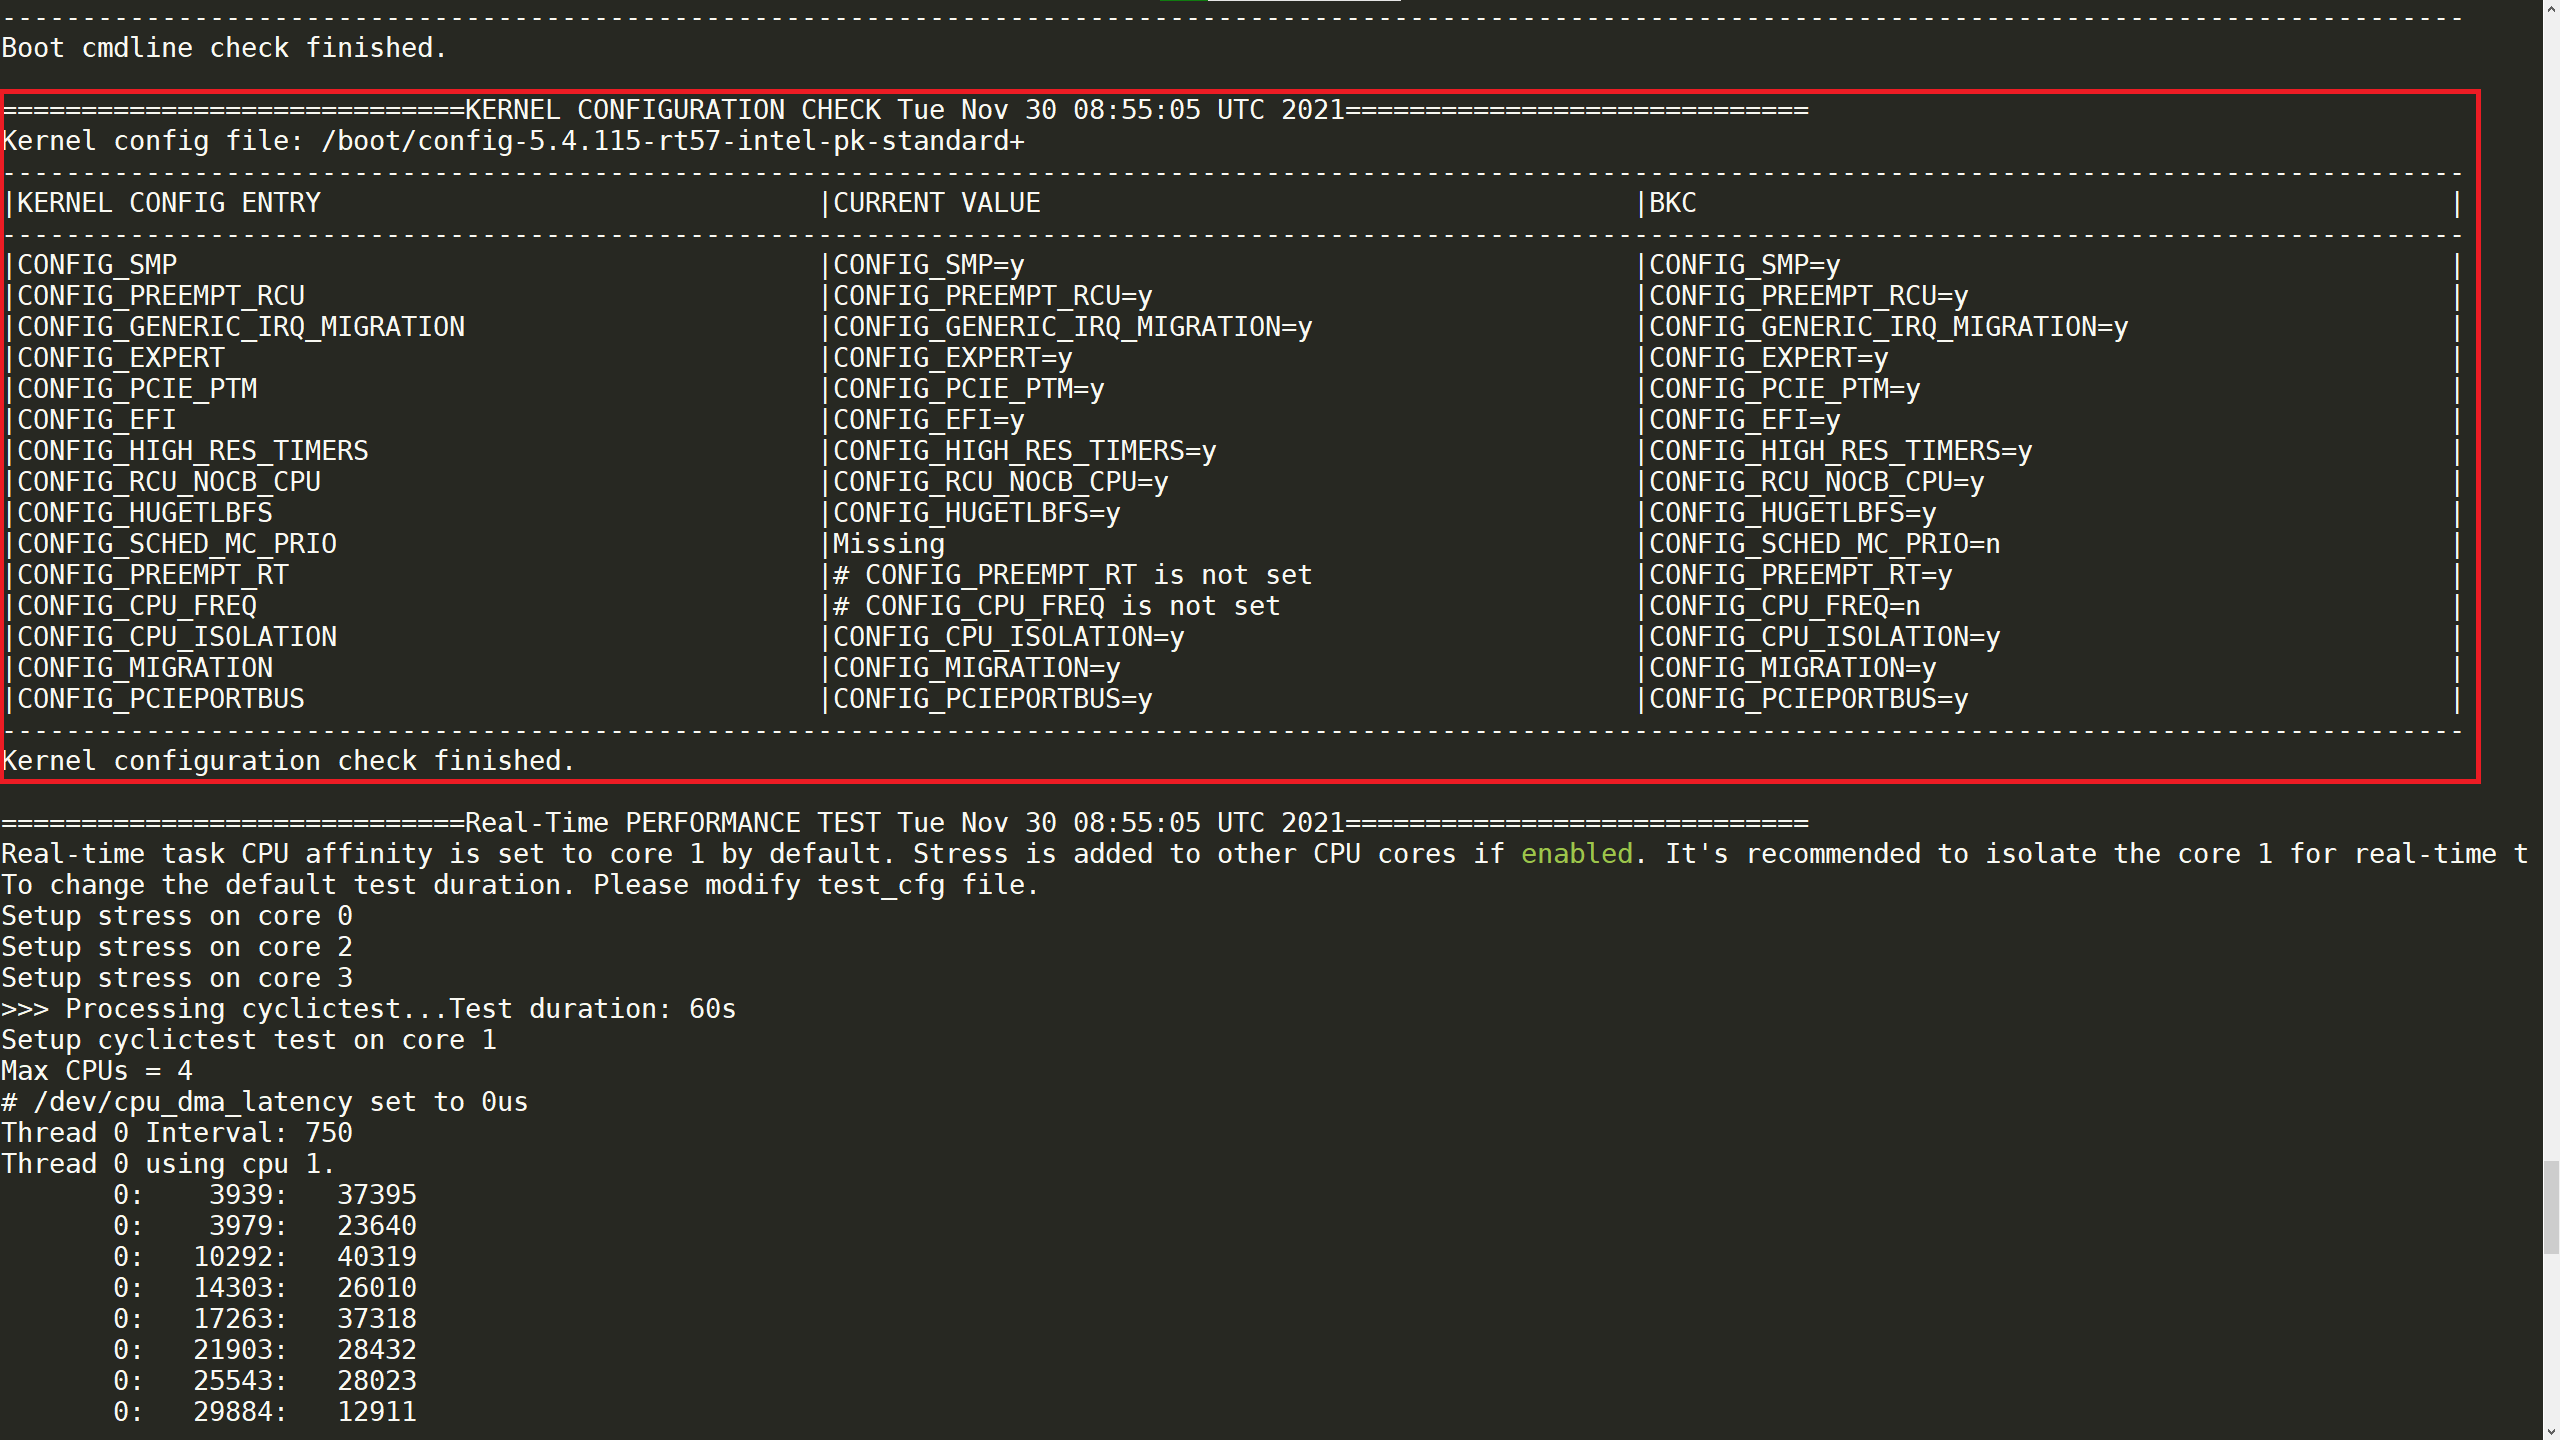 Screenshot of kernel configuration check